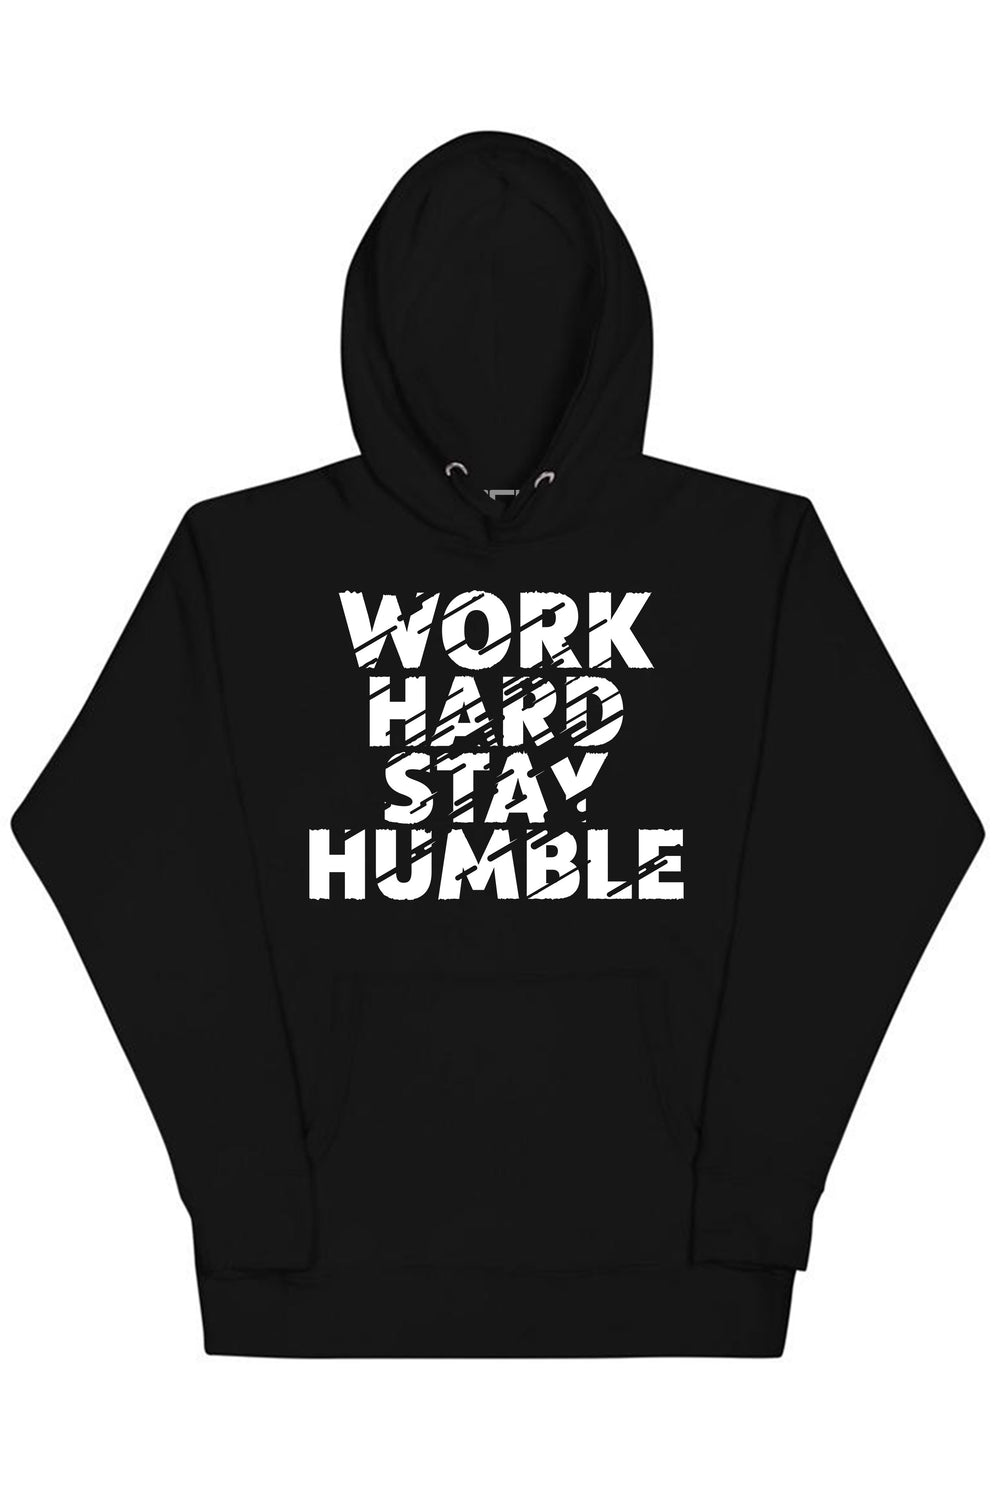 Work Hard Stay Humble Hoodie (White Logo) - Zamage